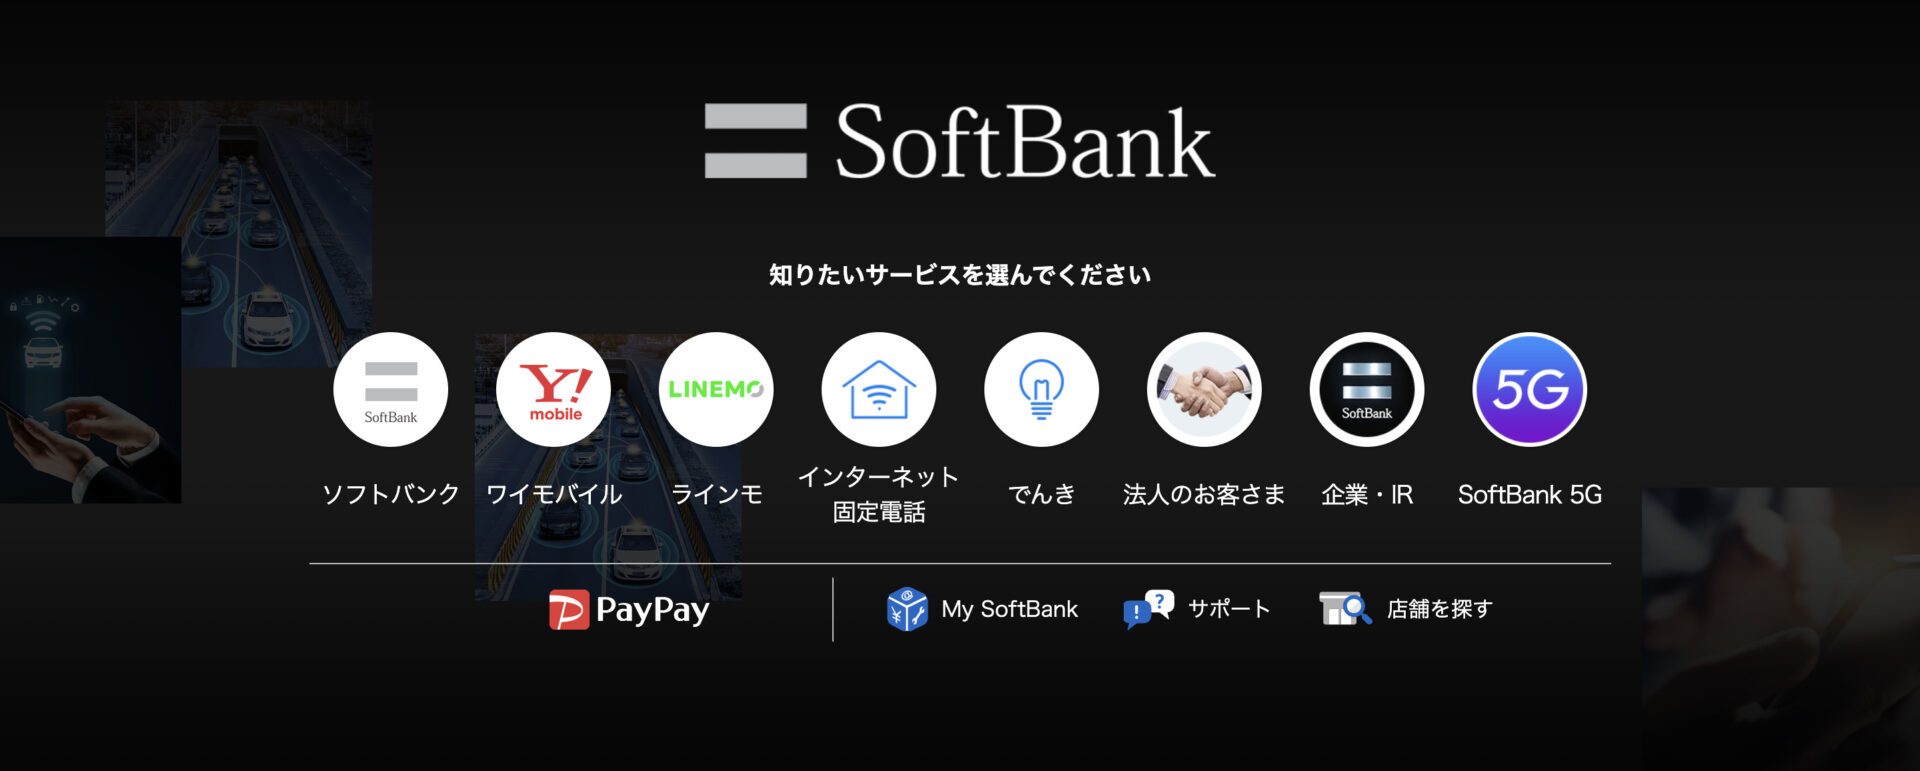 “SoftBankのホームページ”